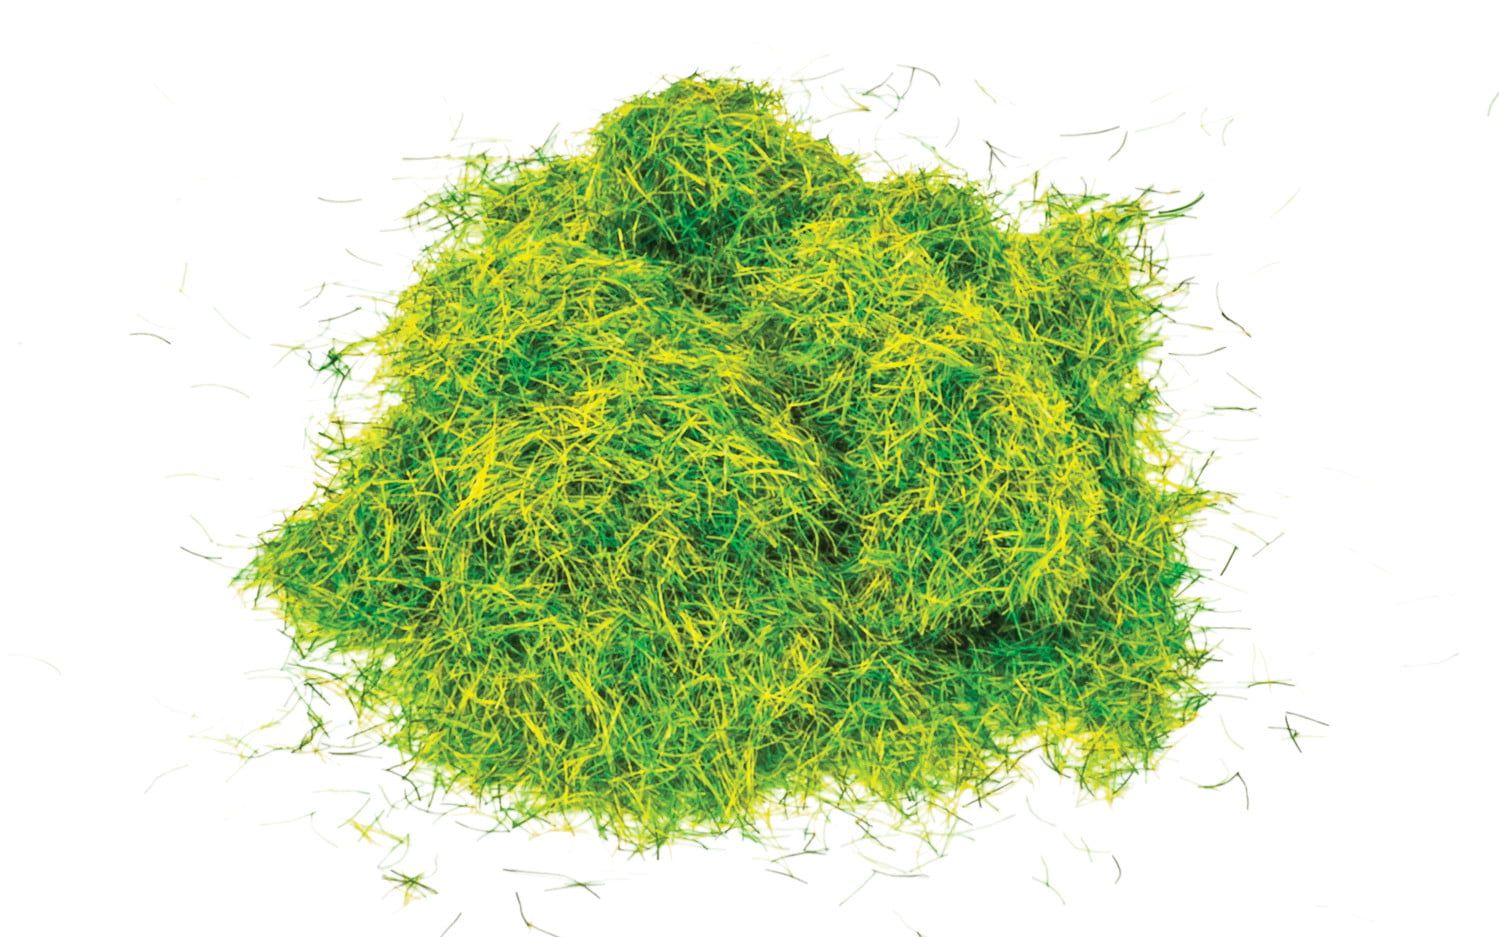 Hornby Static Grass - Ornamental Lawn, 2.5mm OO Gauge